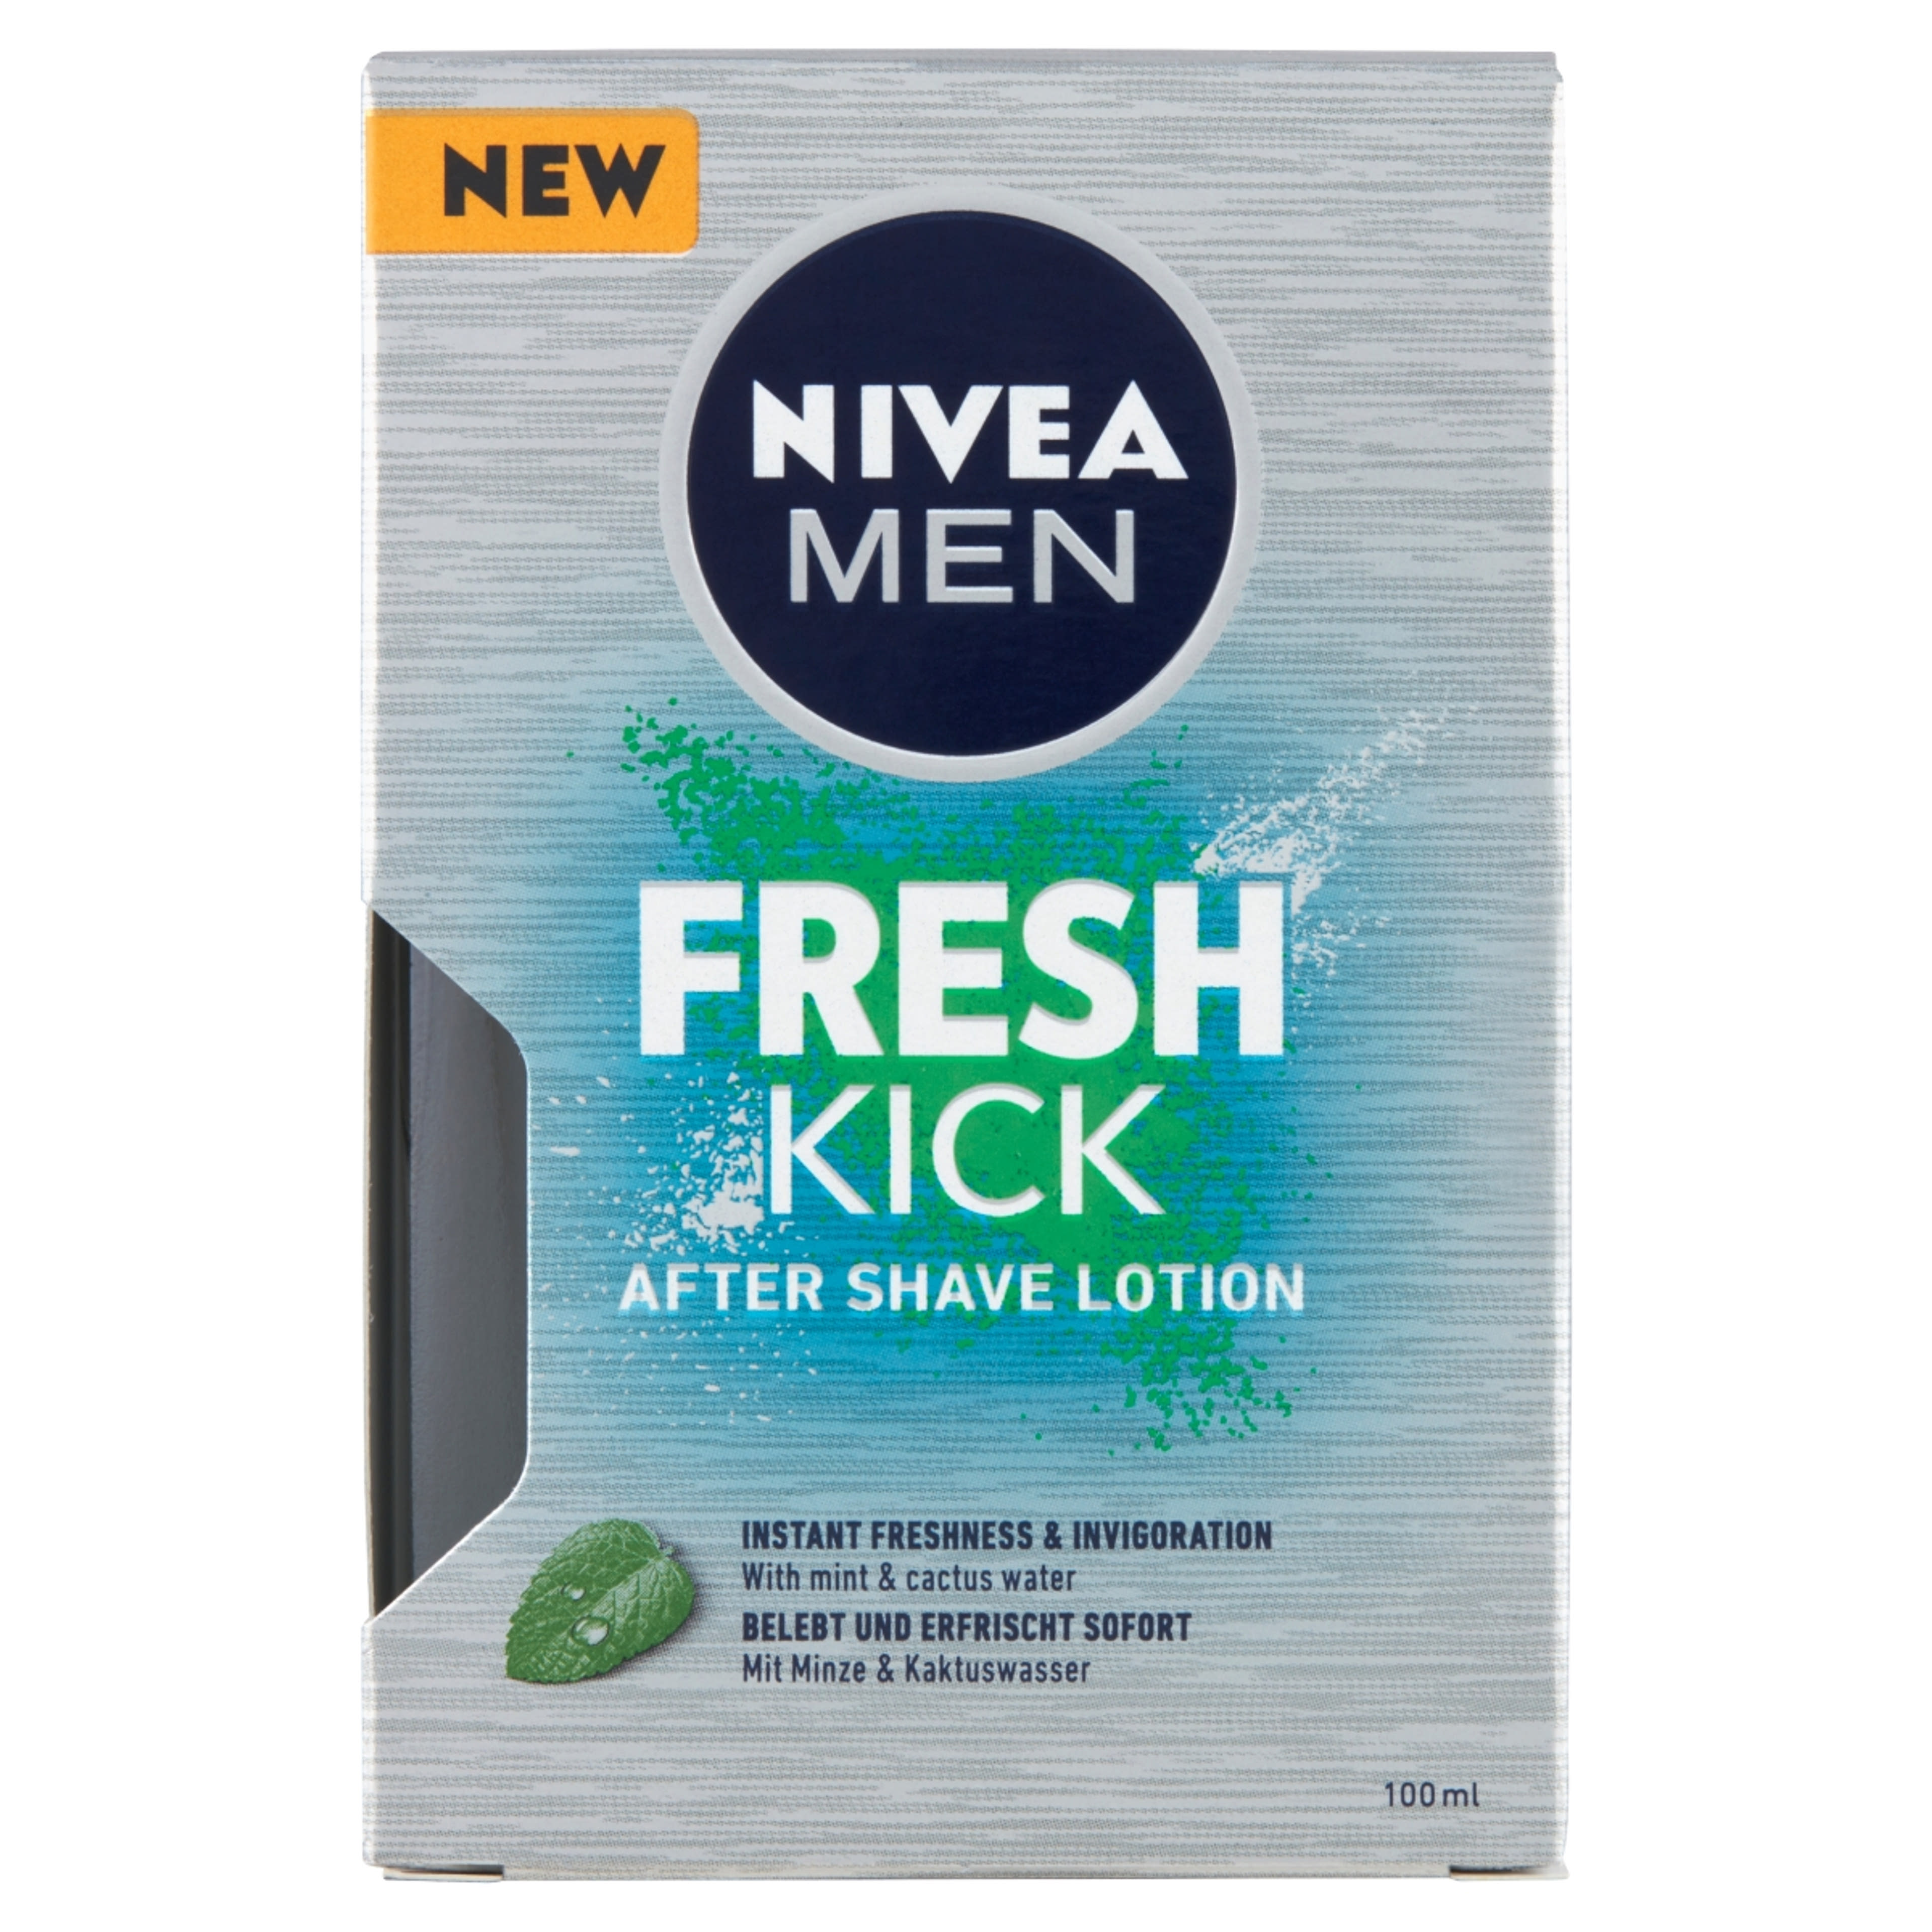 NIVEA MEN after shave fresh kick - 100 ml